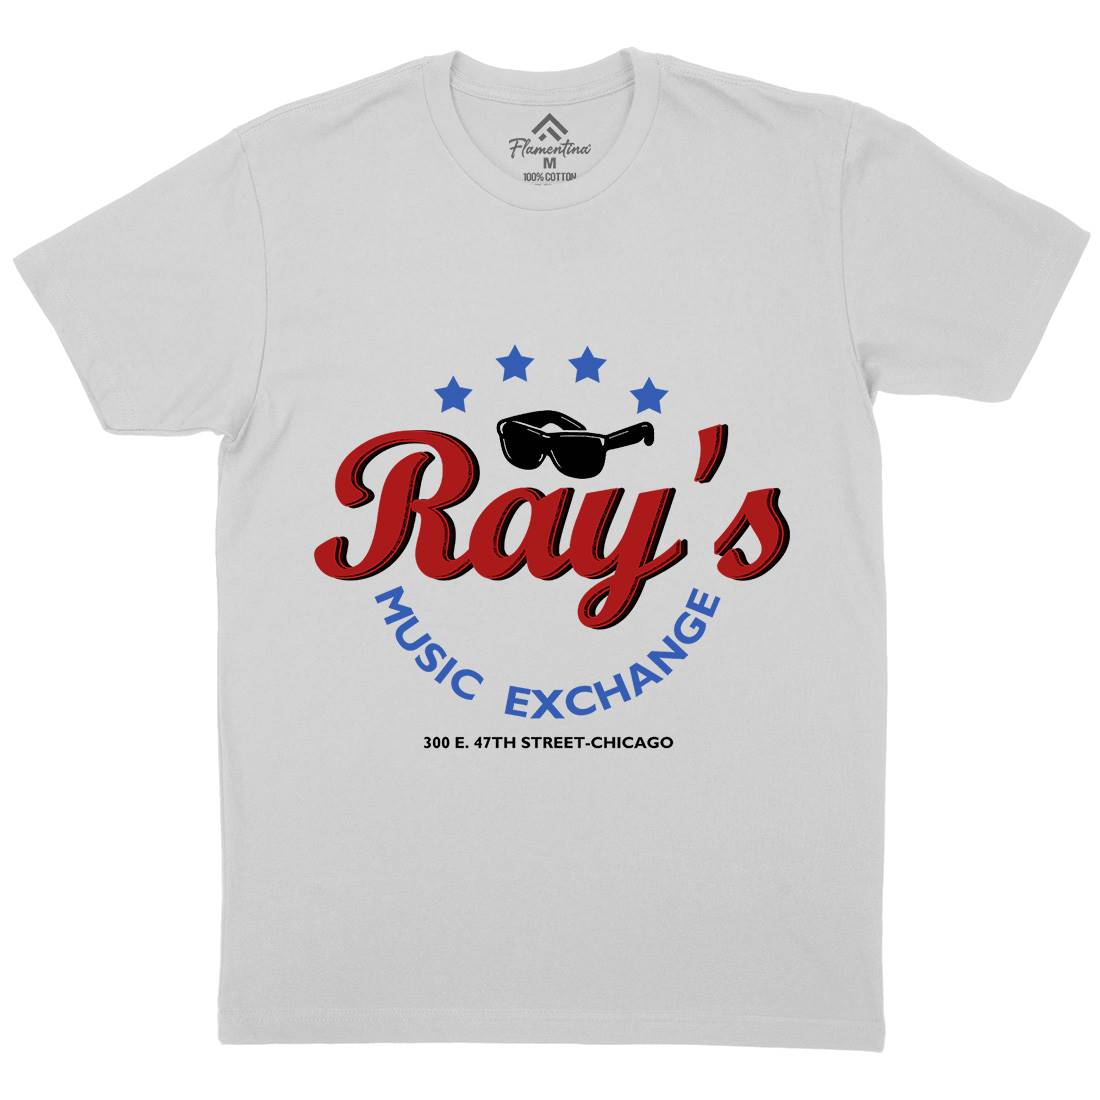 Rays Music Exchange Mens Crew Neck T-Shirt Music D380